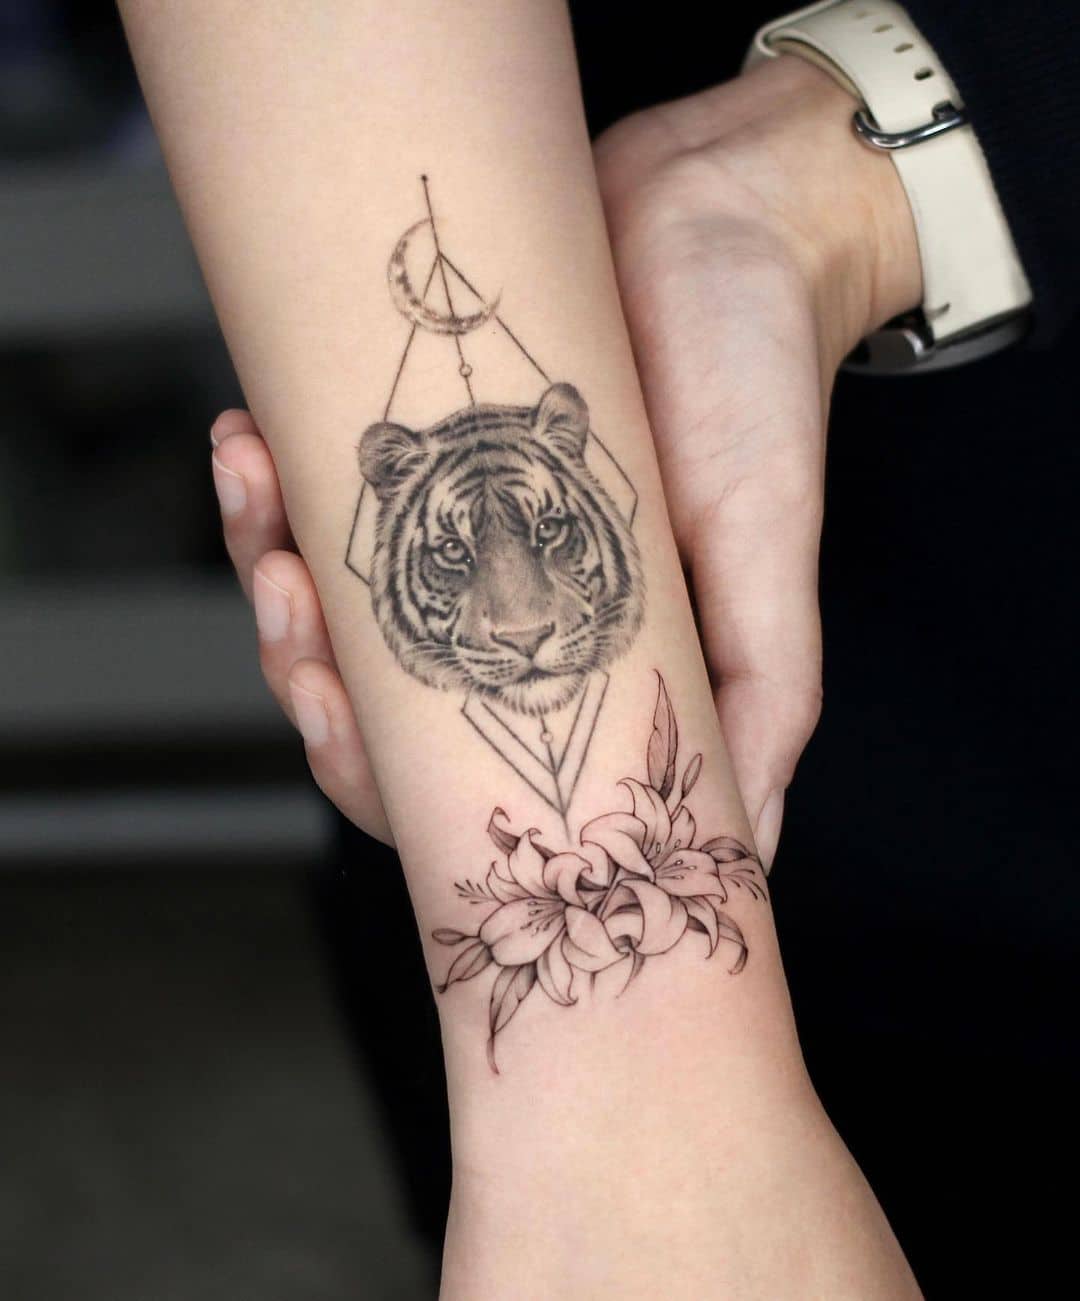 Geometric tiger design by tattooist dh